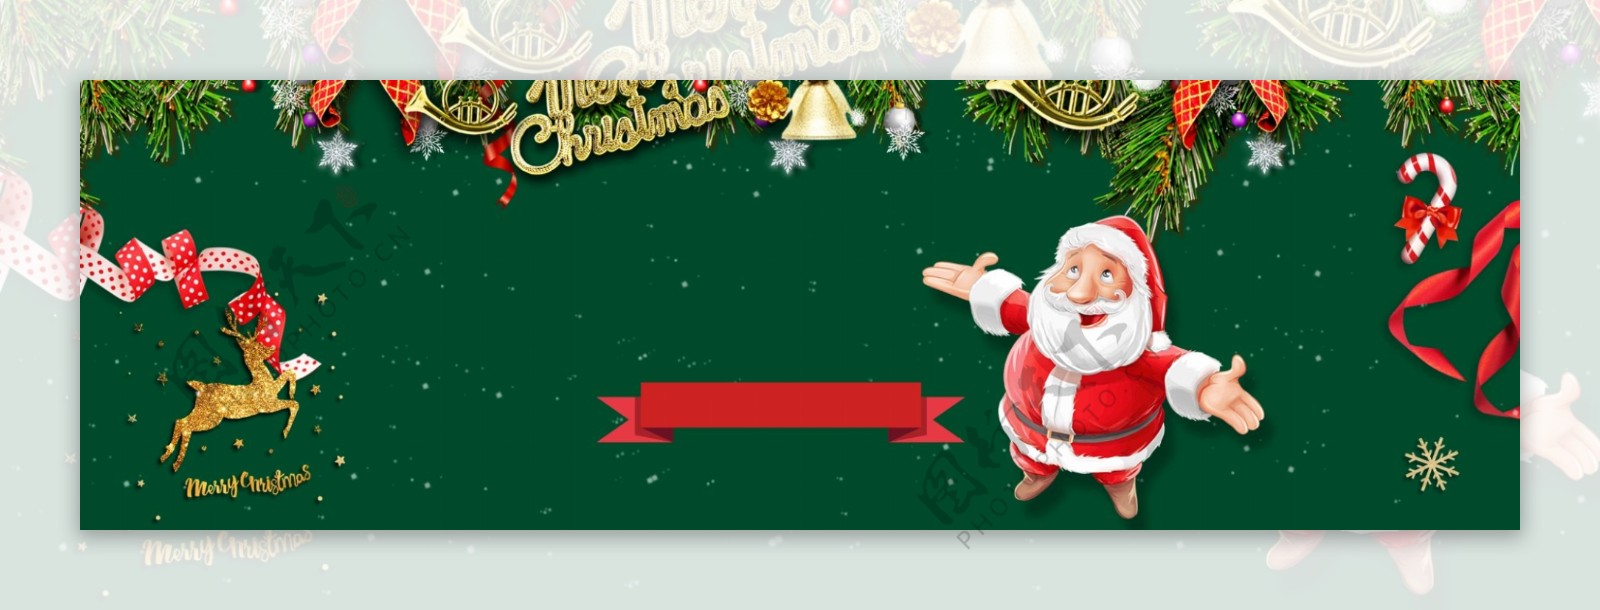 绿色卡通圣诞节banner背景